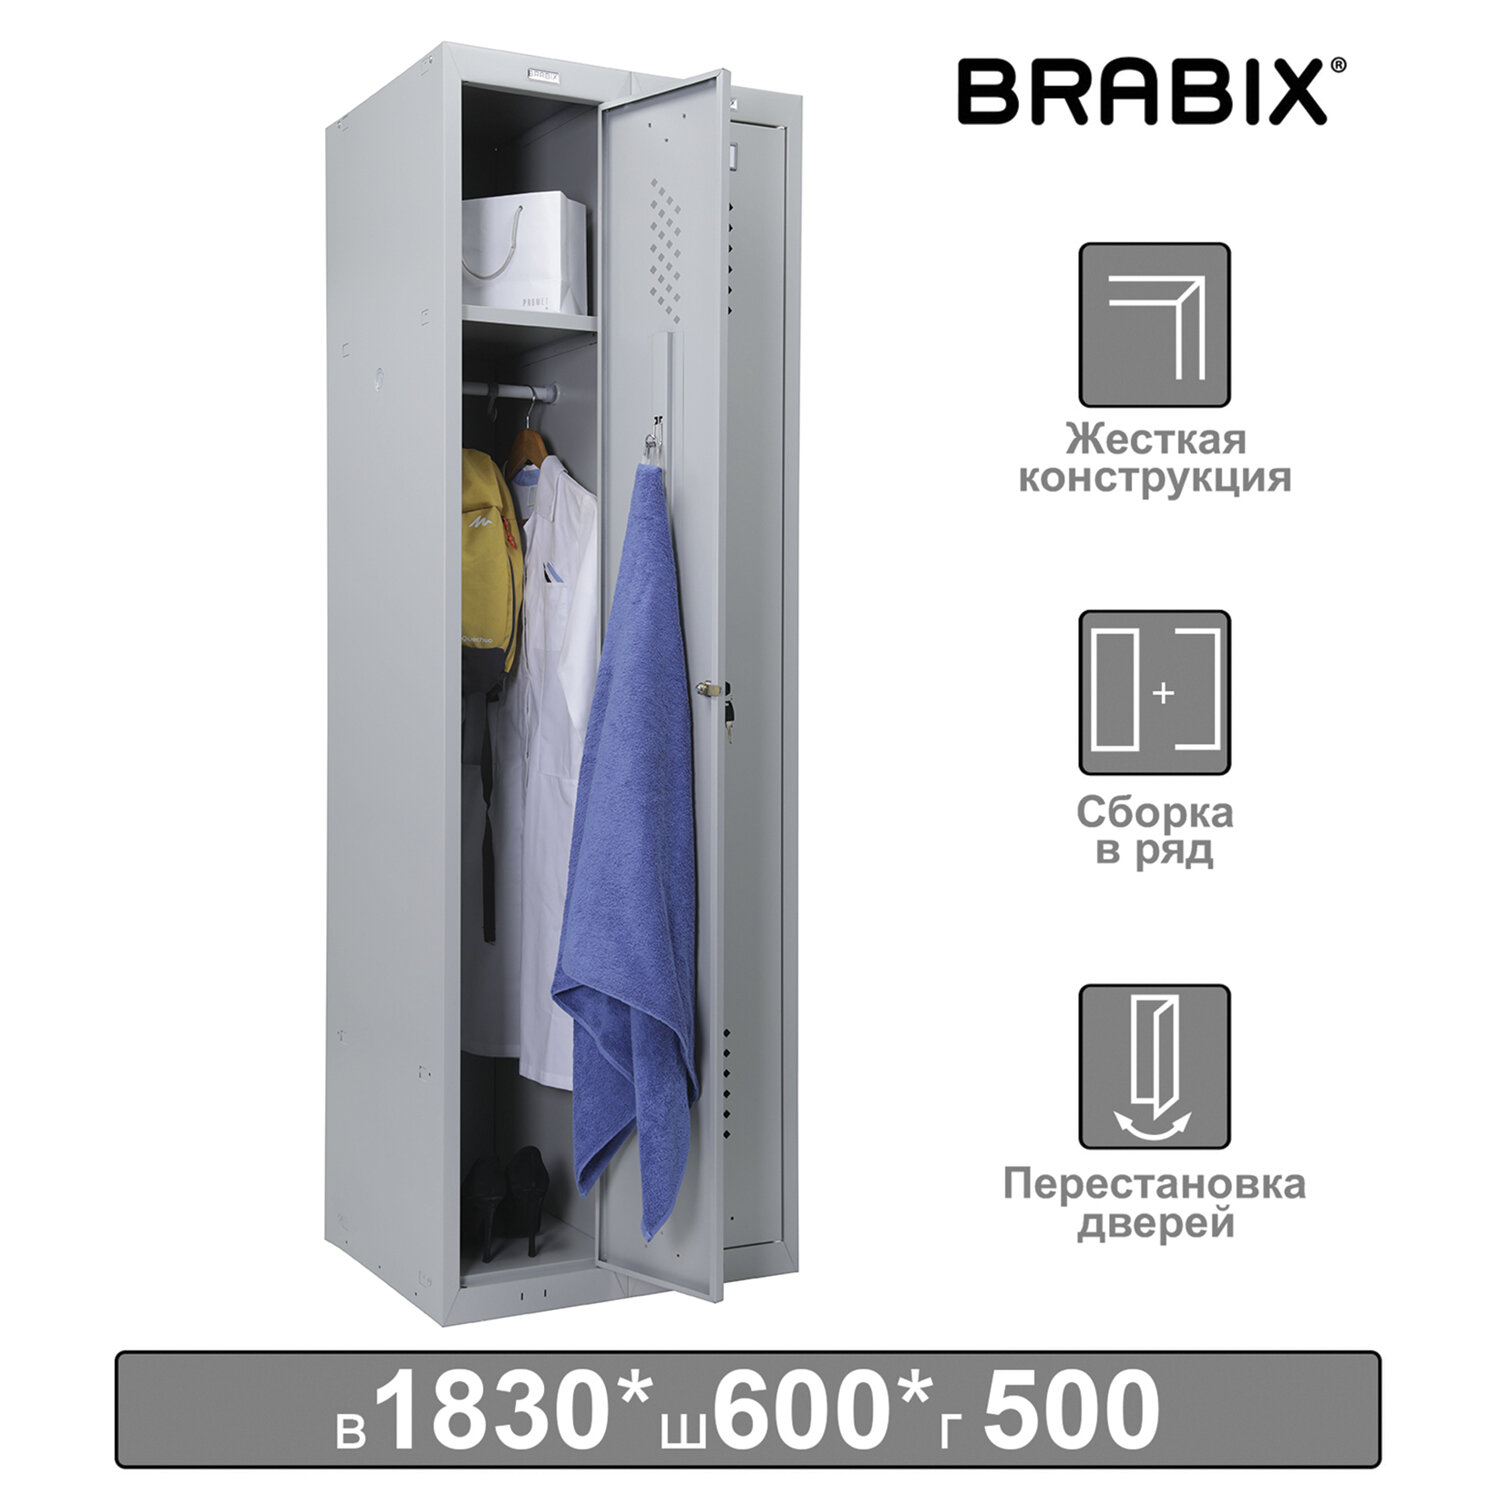 Brabix     BRABIX LK 21-60, , 2 , 1830600500 , 32 , 291126, S230BR402502